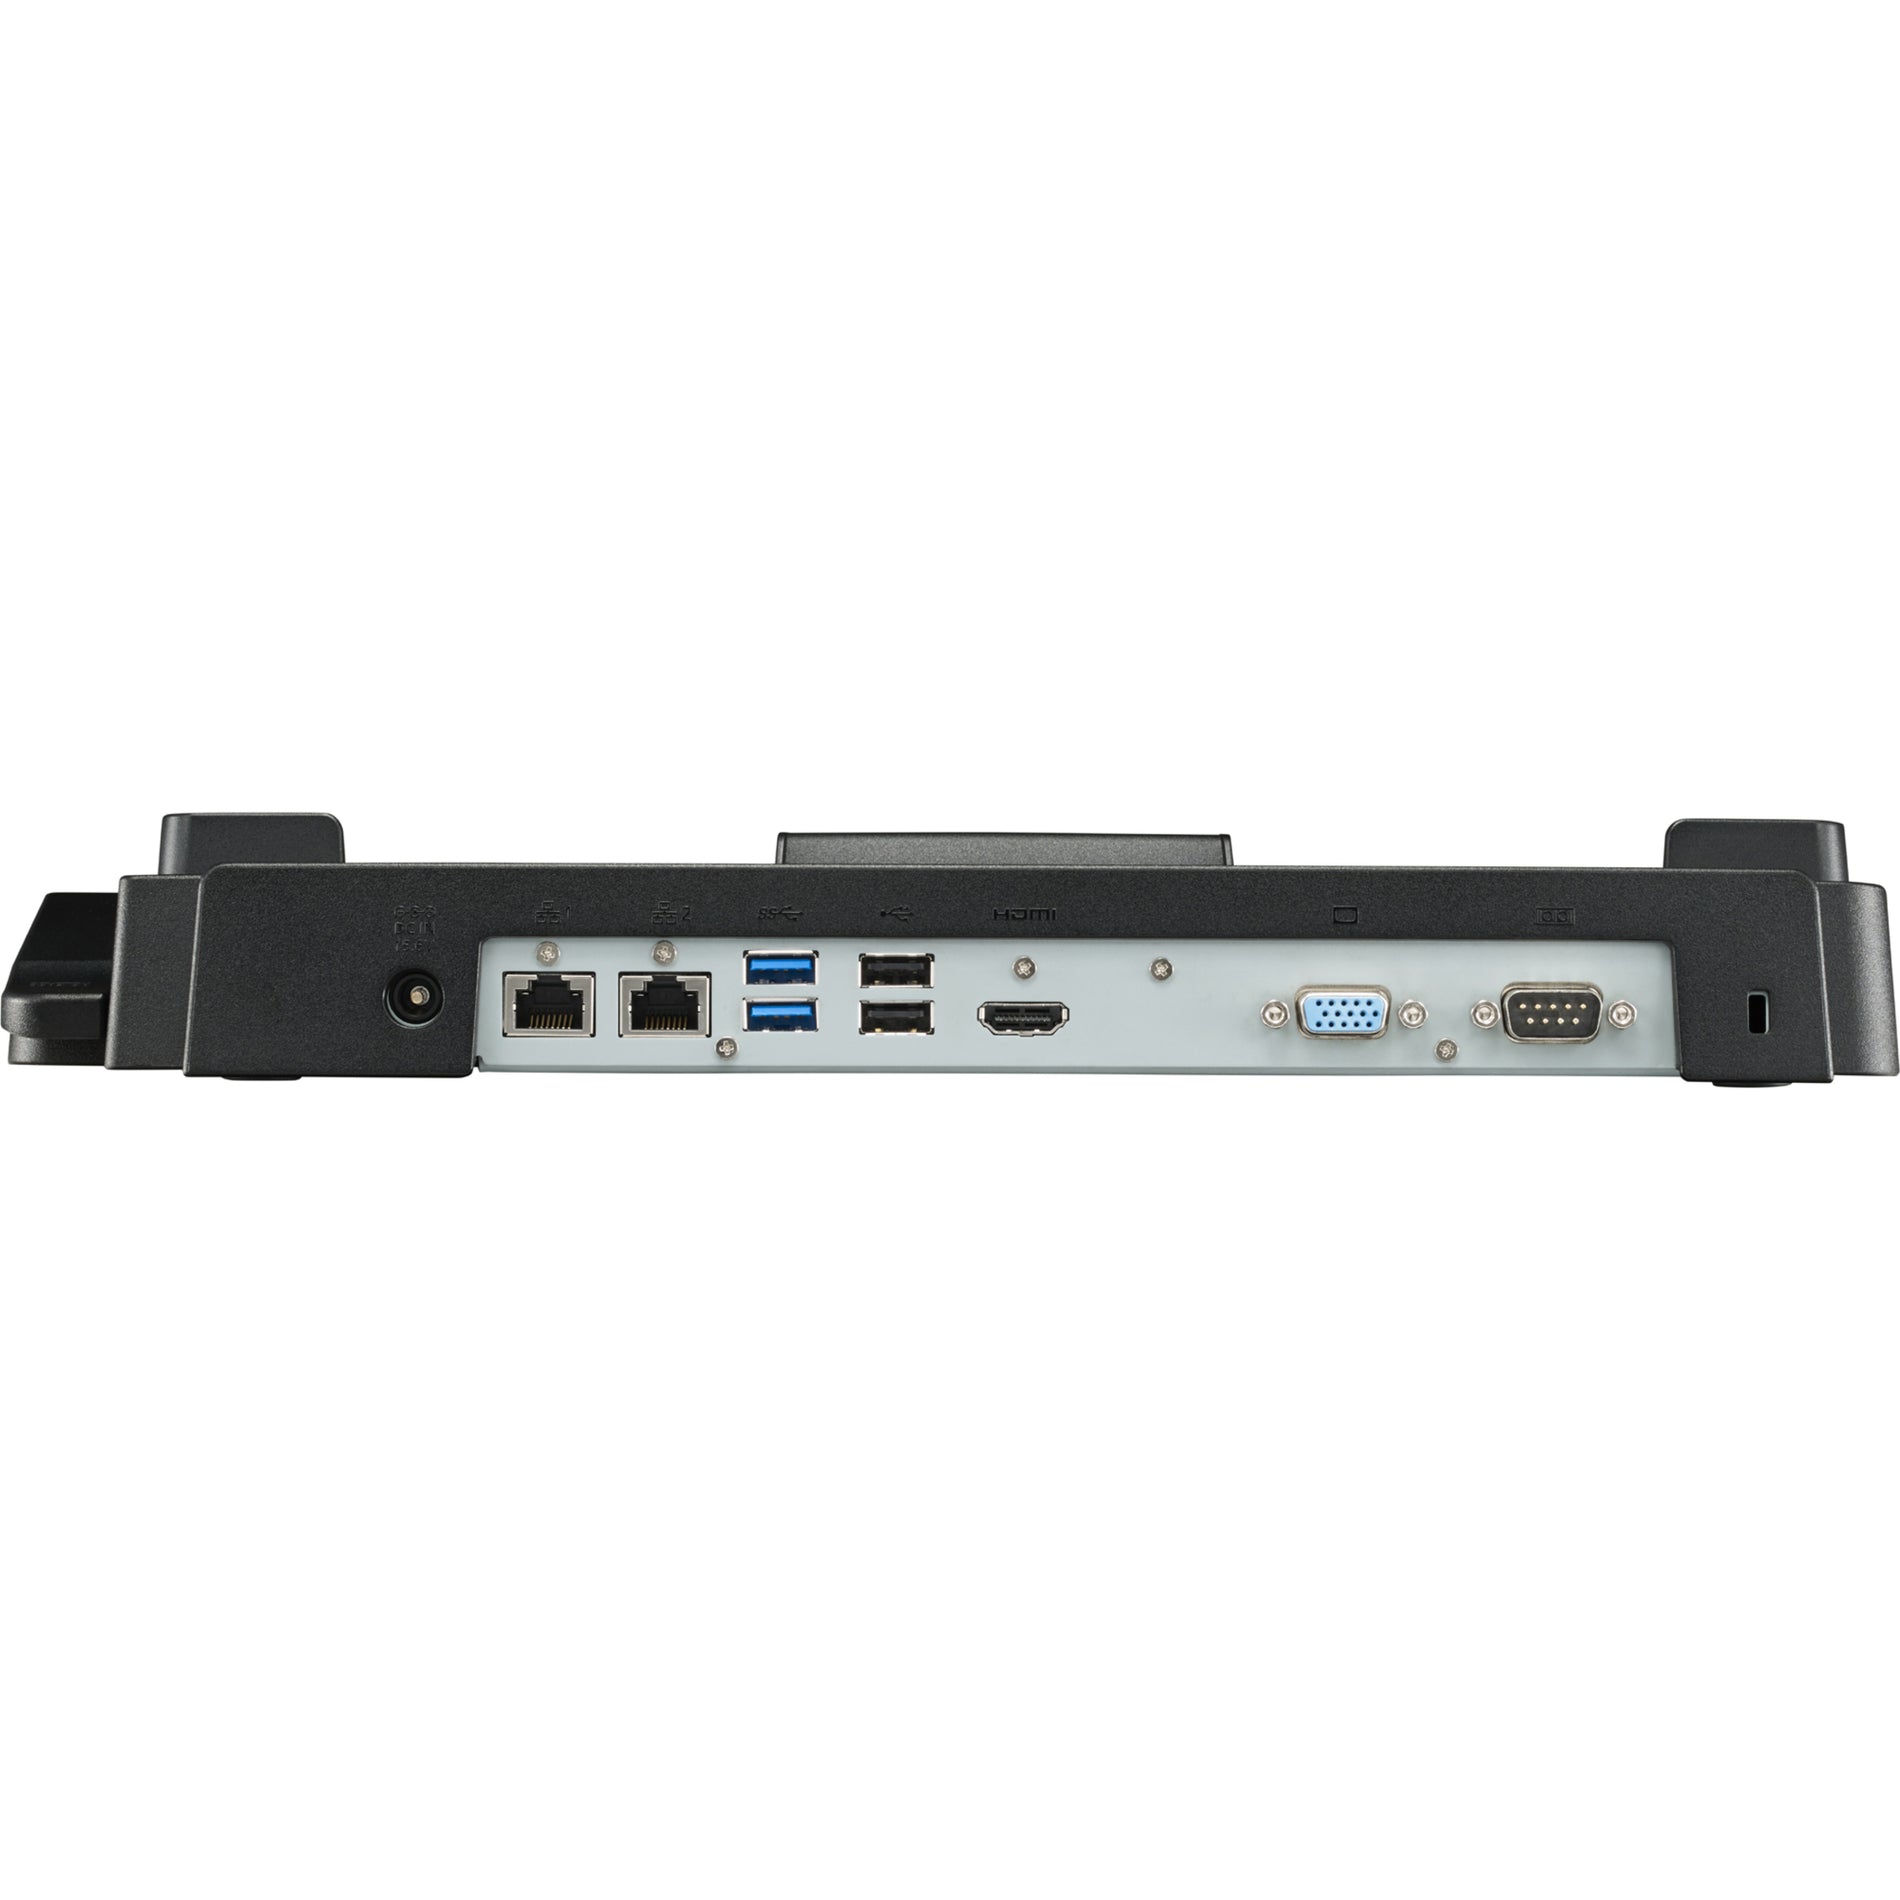 Panasonic CF-VEB331U Desktop Port Replicator, USB Type C Docking Station with VGA, HDMI, Serial, and USB Ports